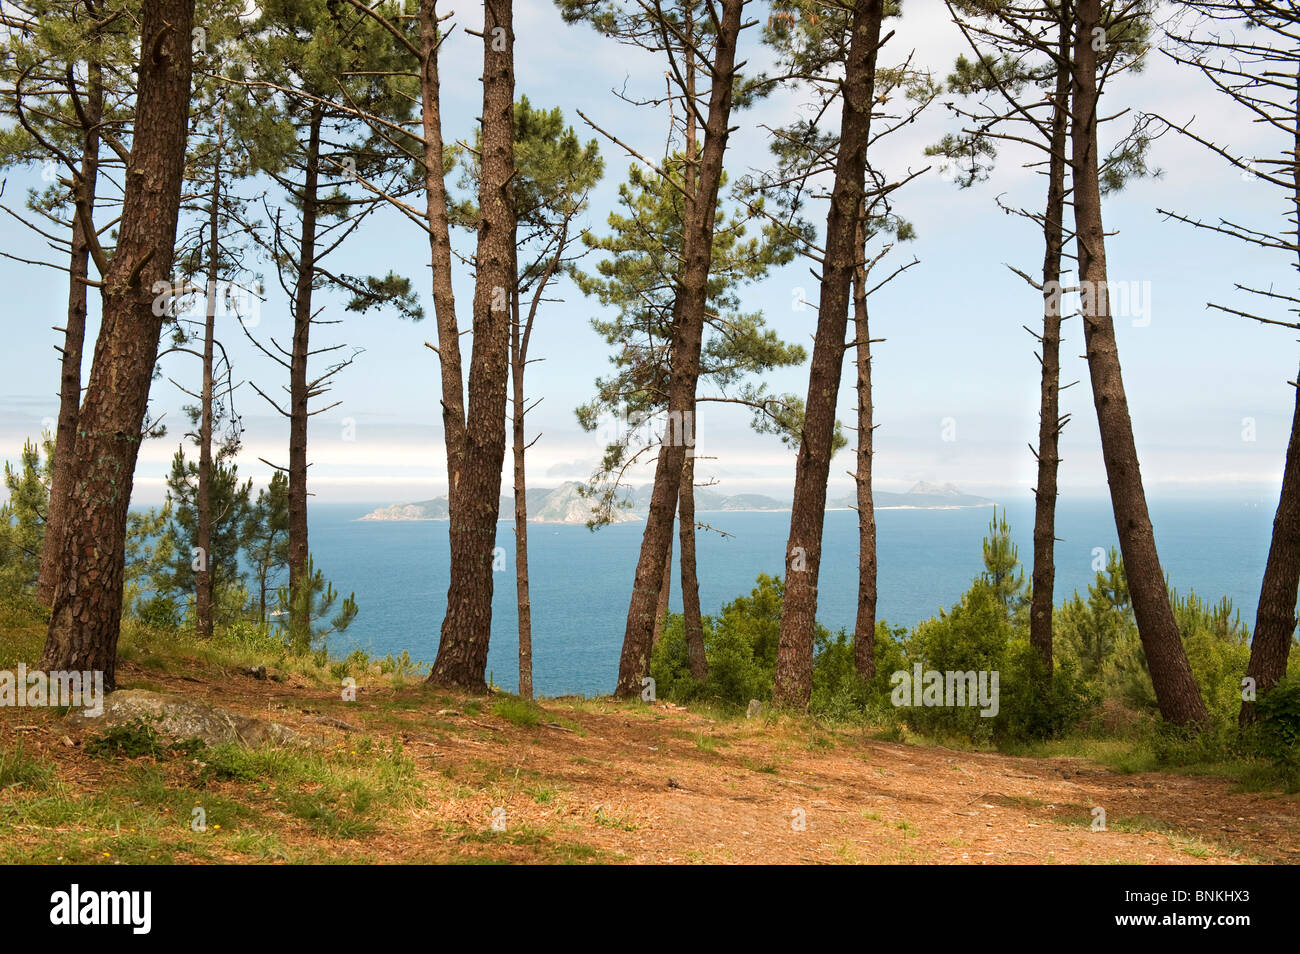 View of the Cies Islands through trees, off the Pontevedra coast near Vigo, Galicia, North Western Spain Stock Photo